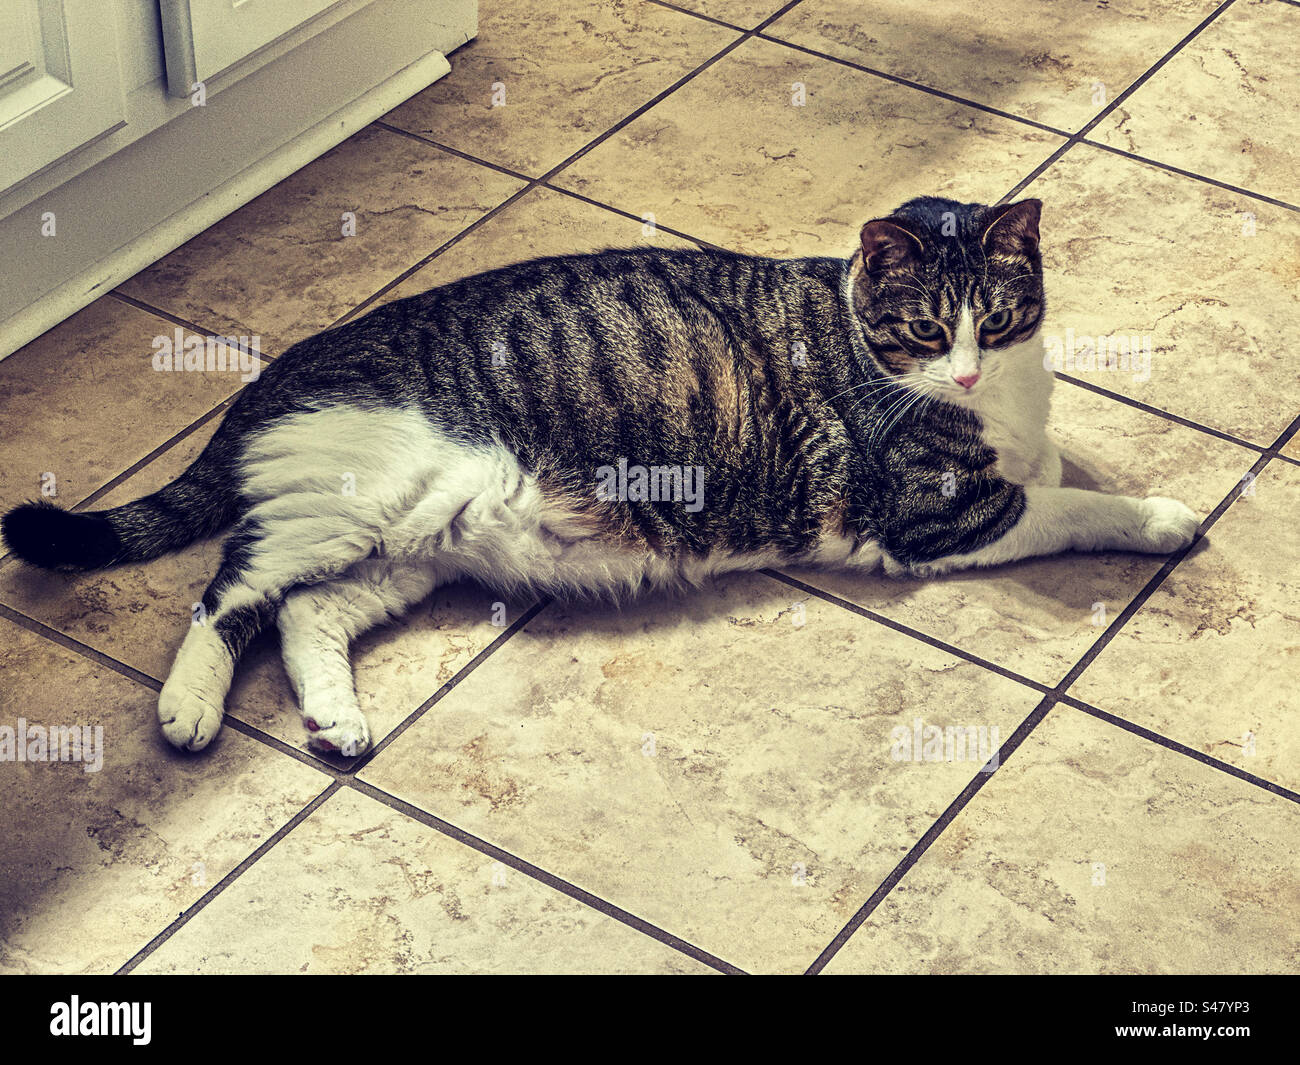 Fat tabby cat relaxing on tile floor Stock Photo